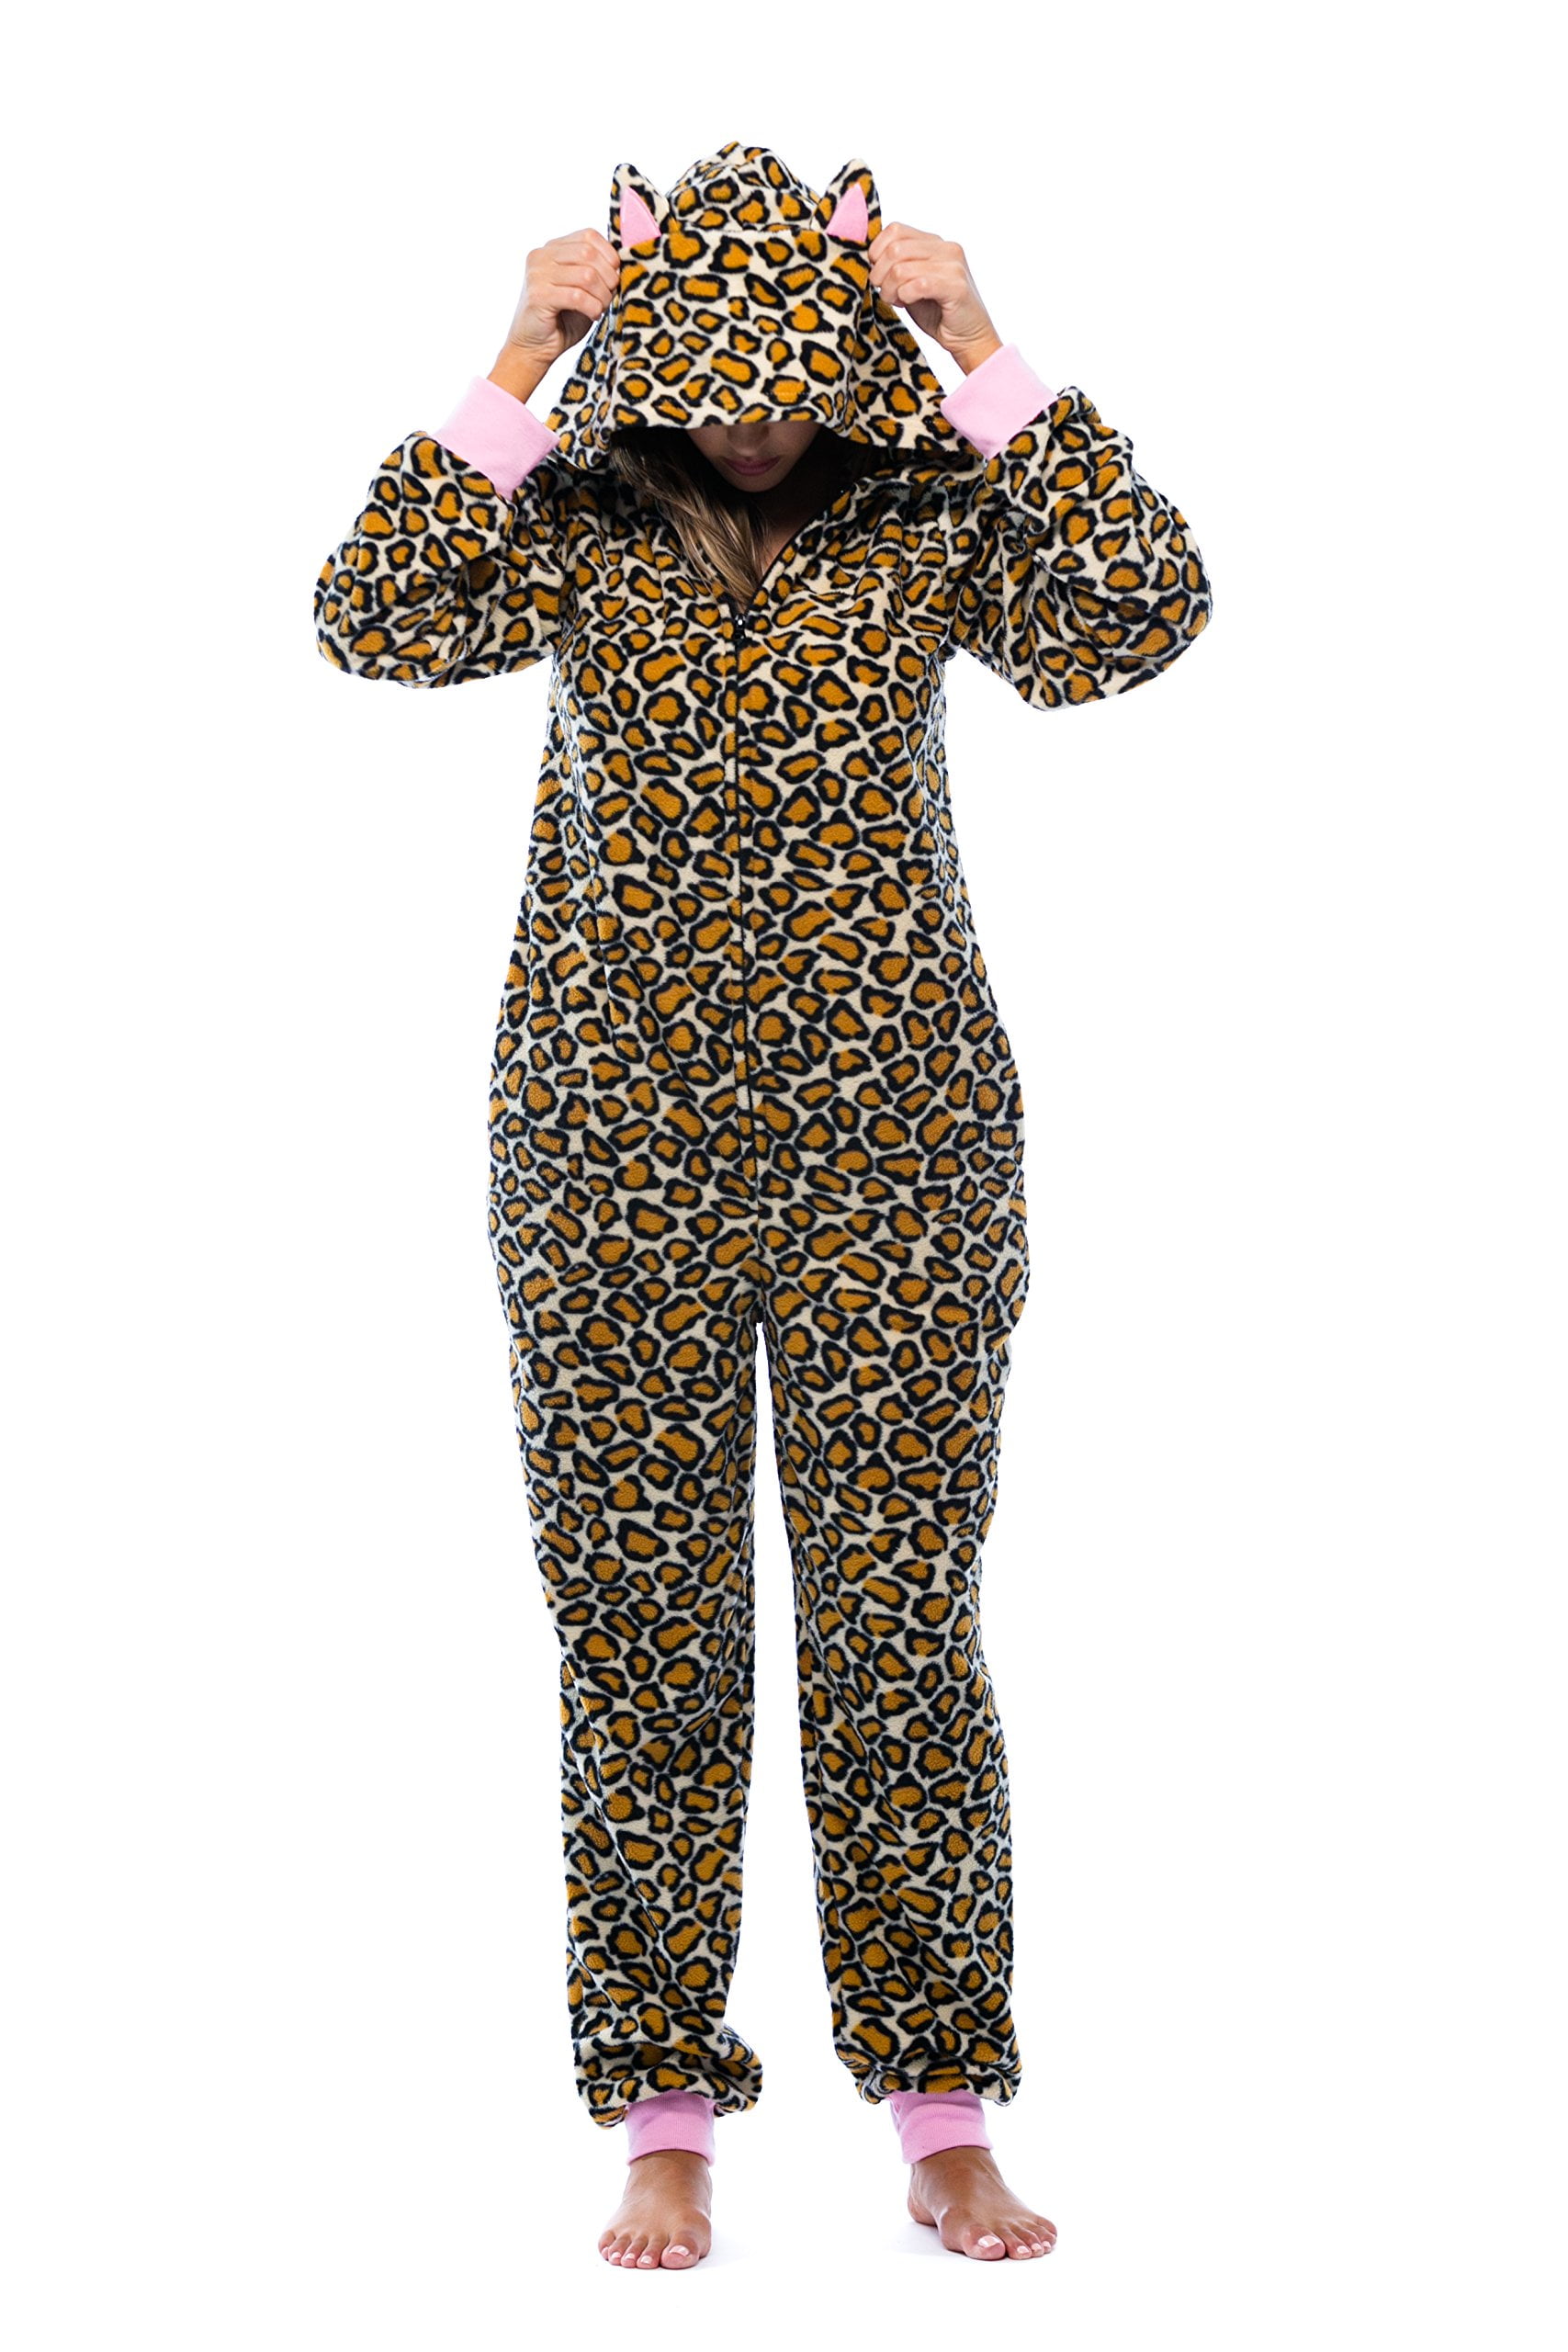 Just Love Adult Onesie with Animal Prints / Pajamas (Cheetah, Large)